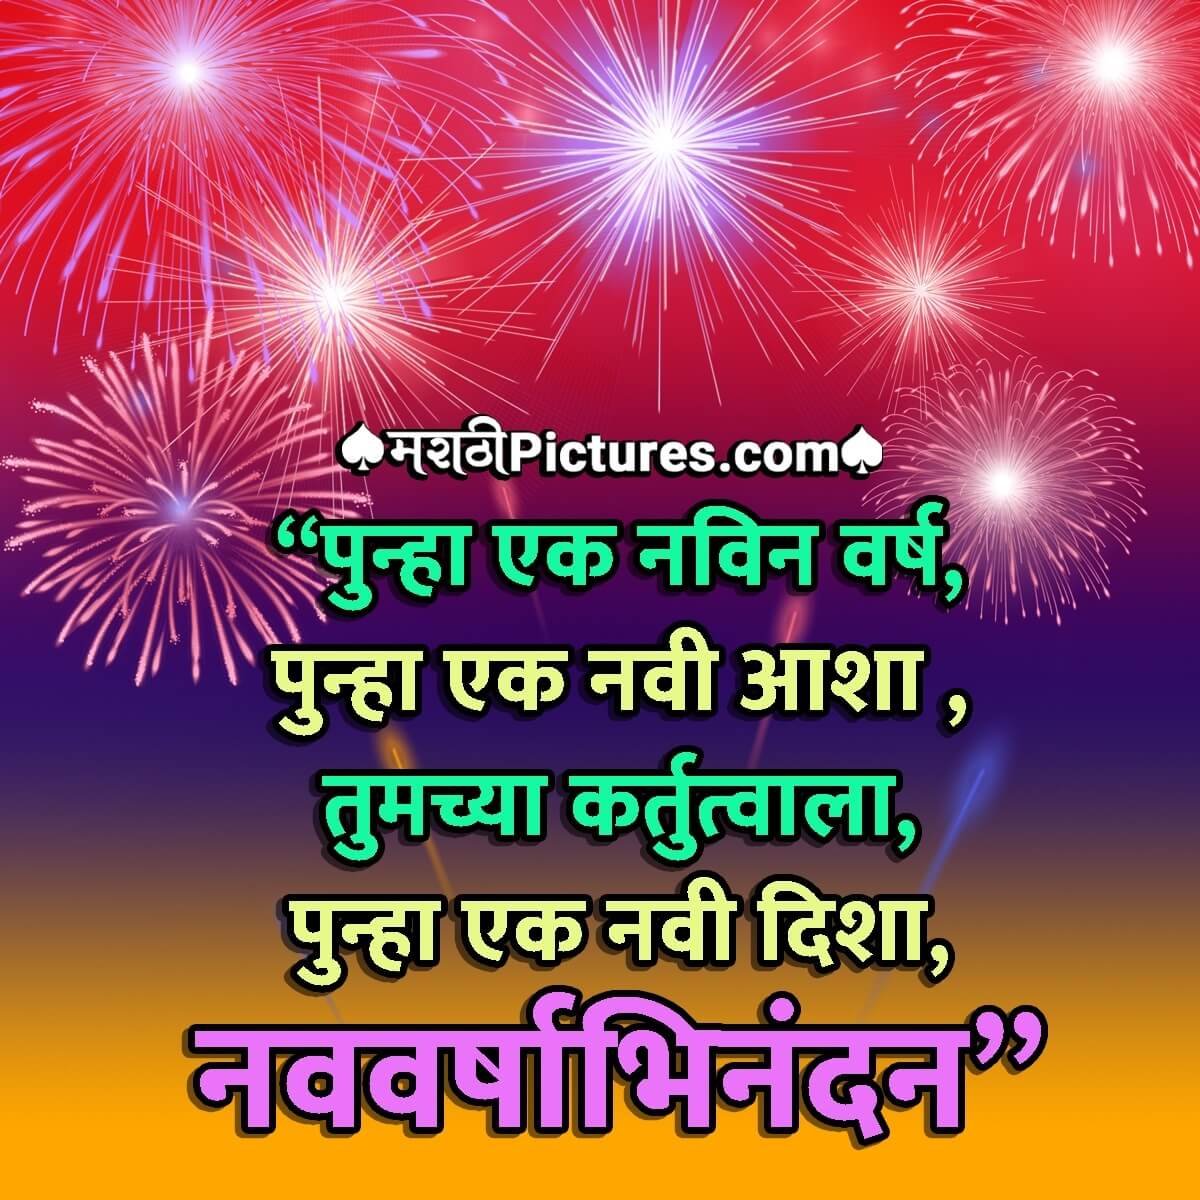 Happy New Year Quote In Marathi